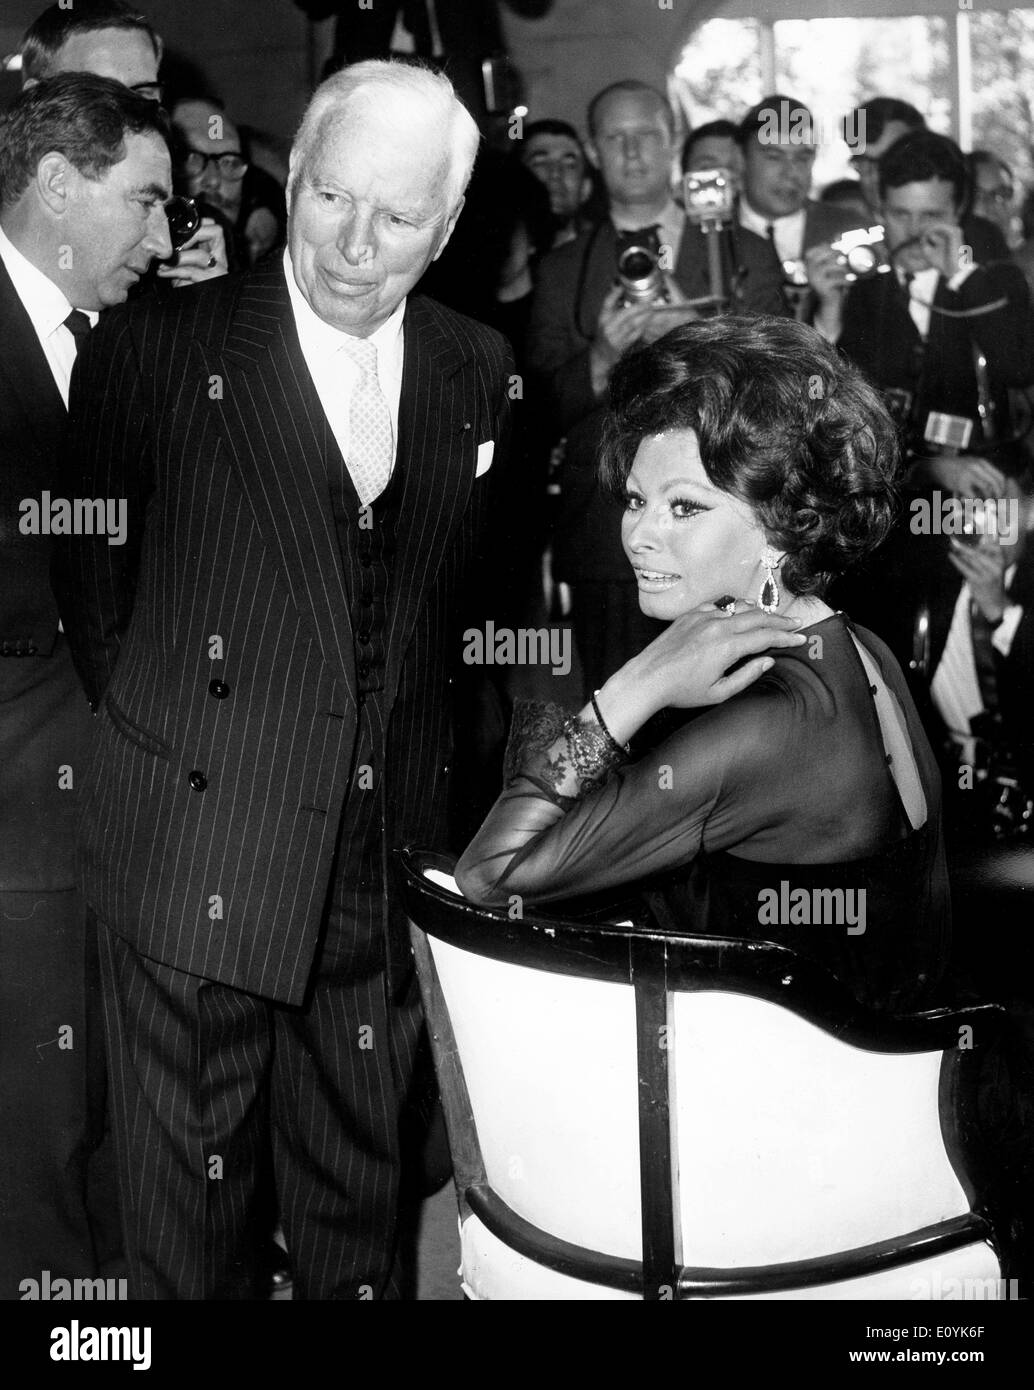 Actors Charlie Chaplin and Sophia Loren at event Stock Photo